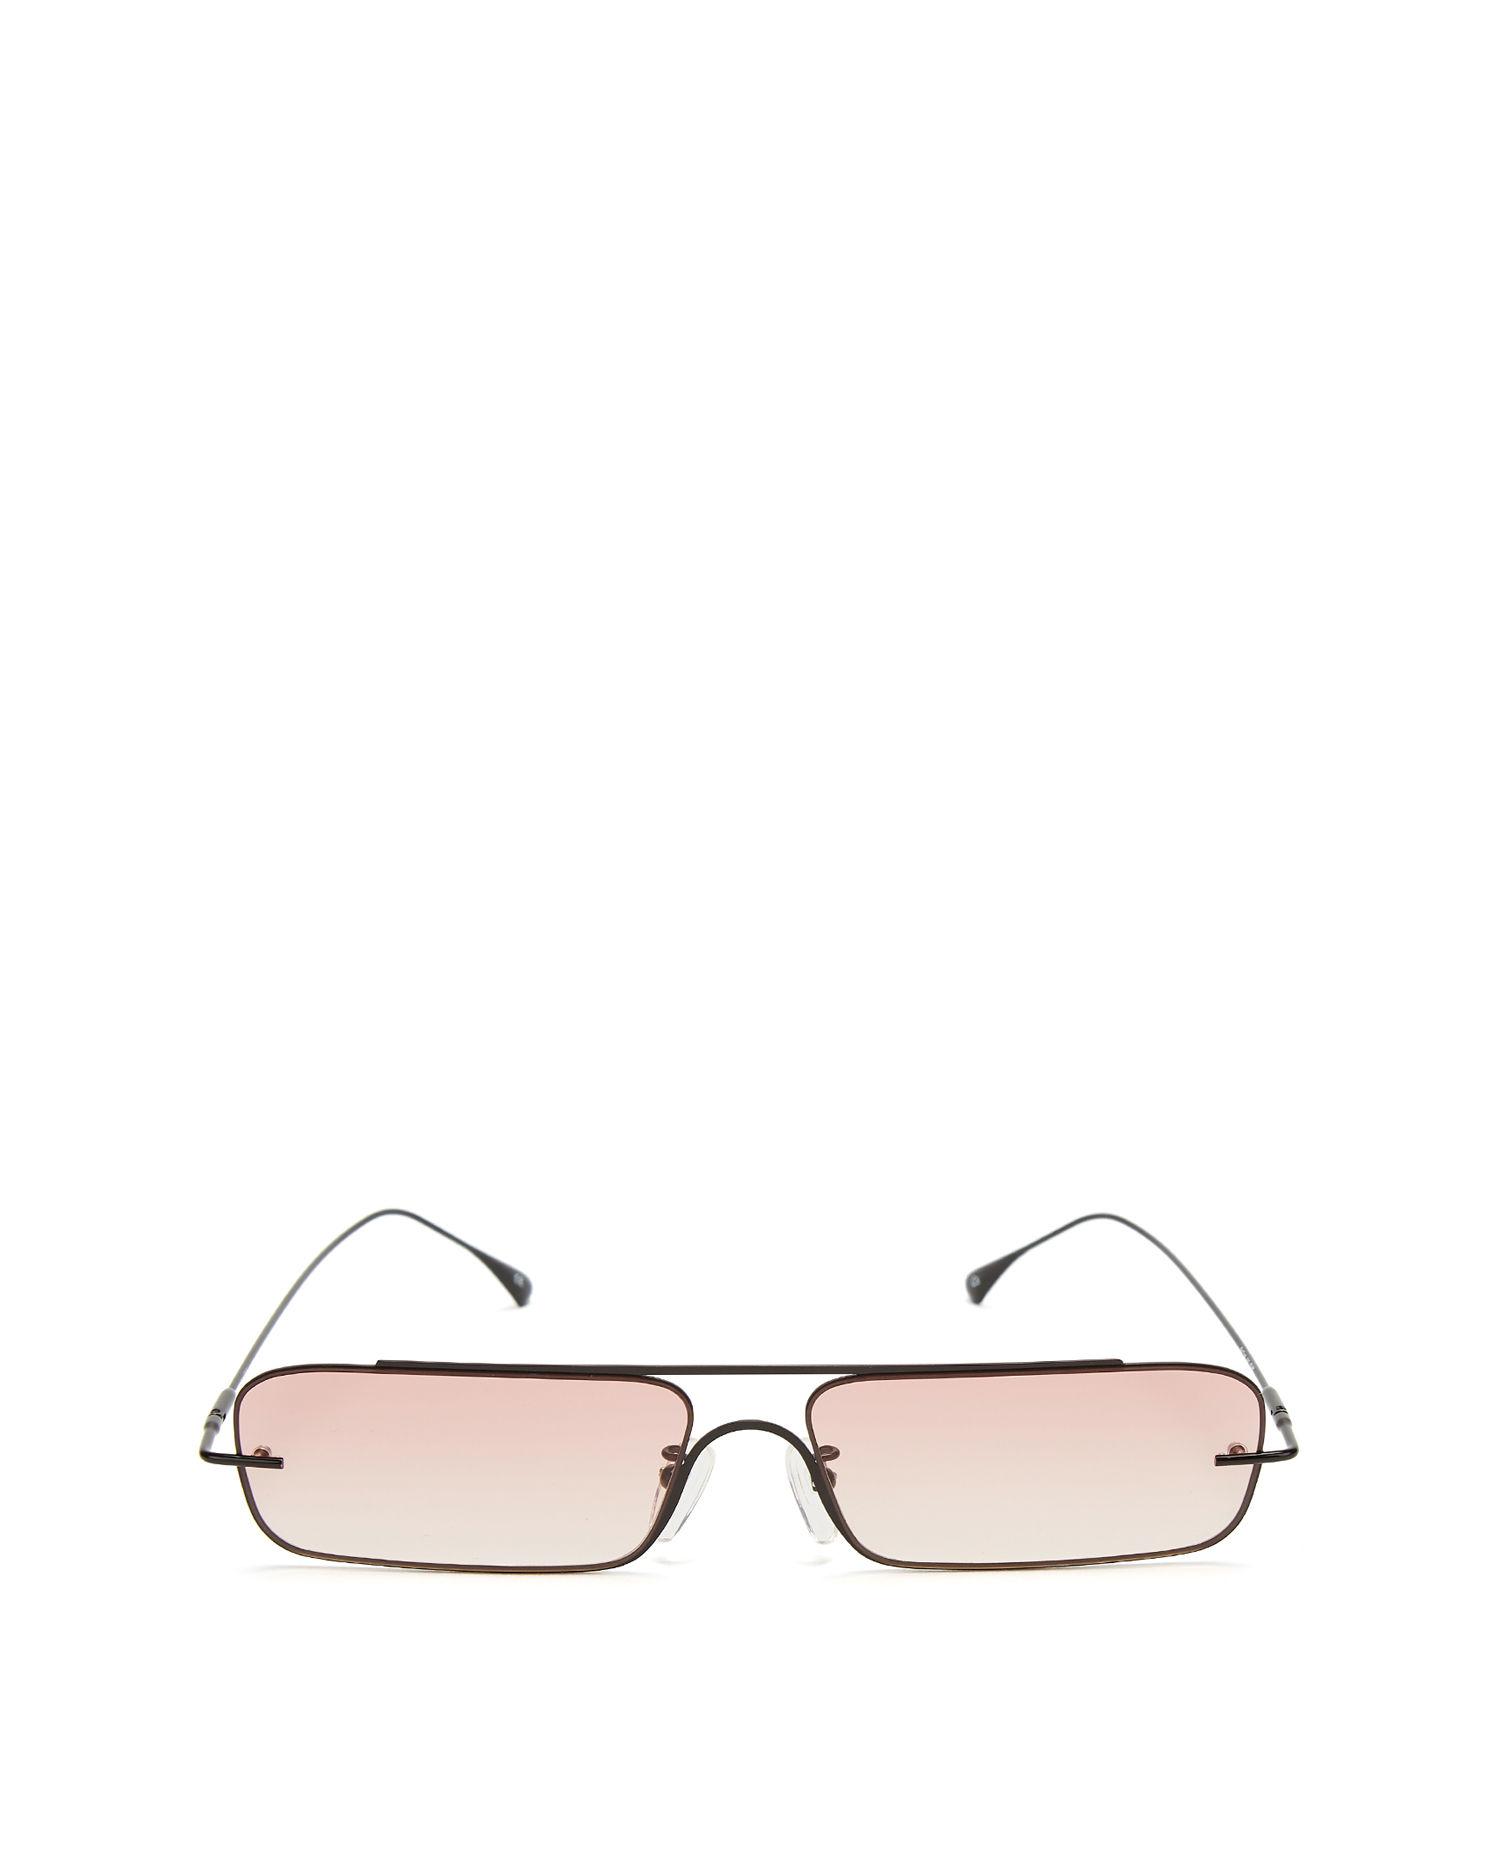 Narrow rectangular sunglasses by BRUB